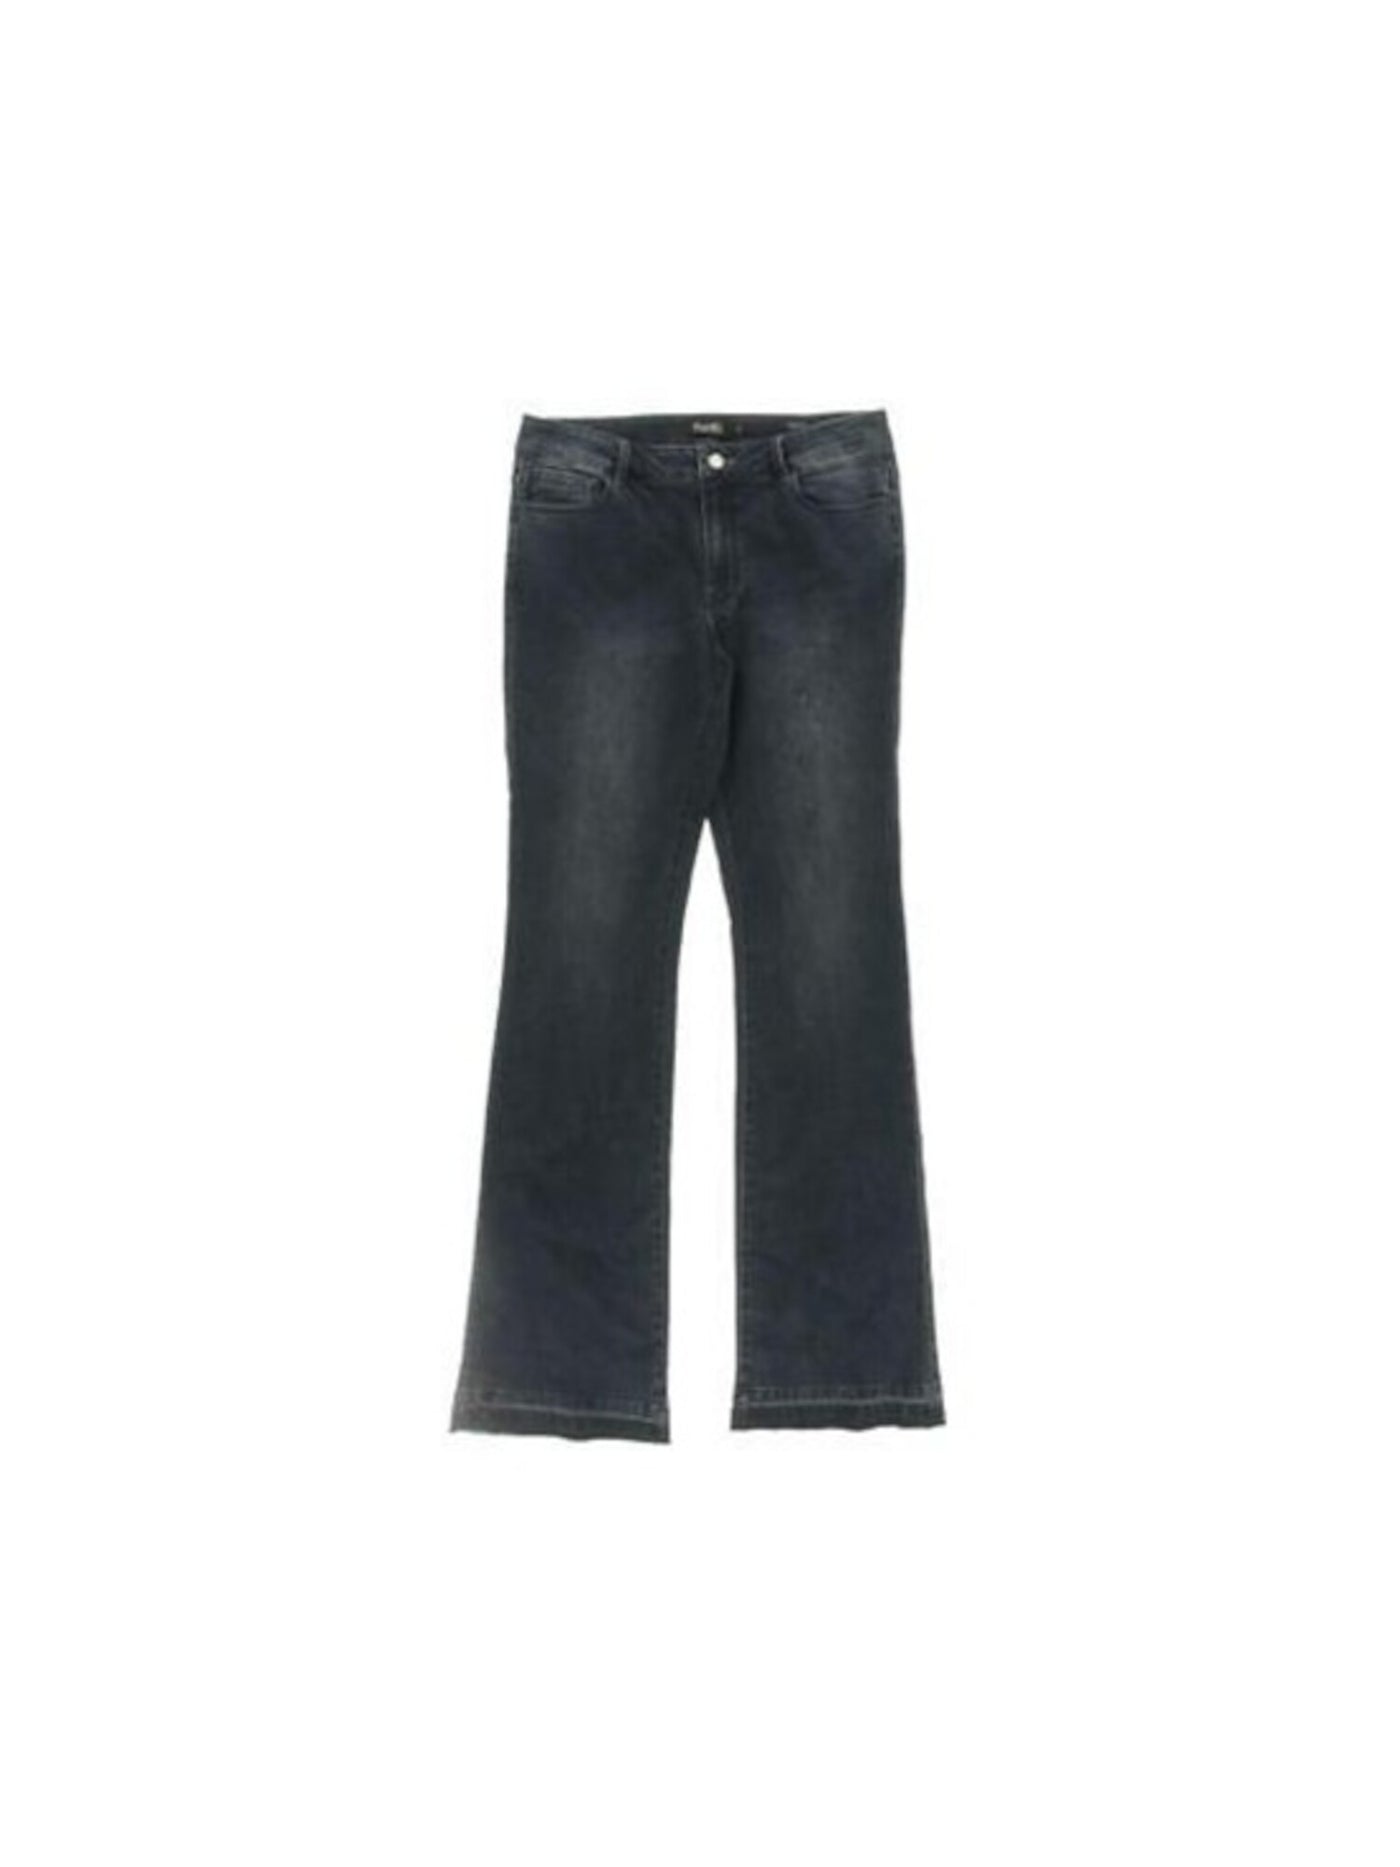 NANETTE LEPORE Womens Blue Boot Cut Jeans 6